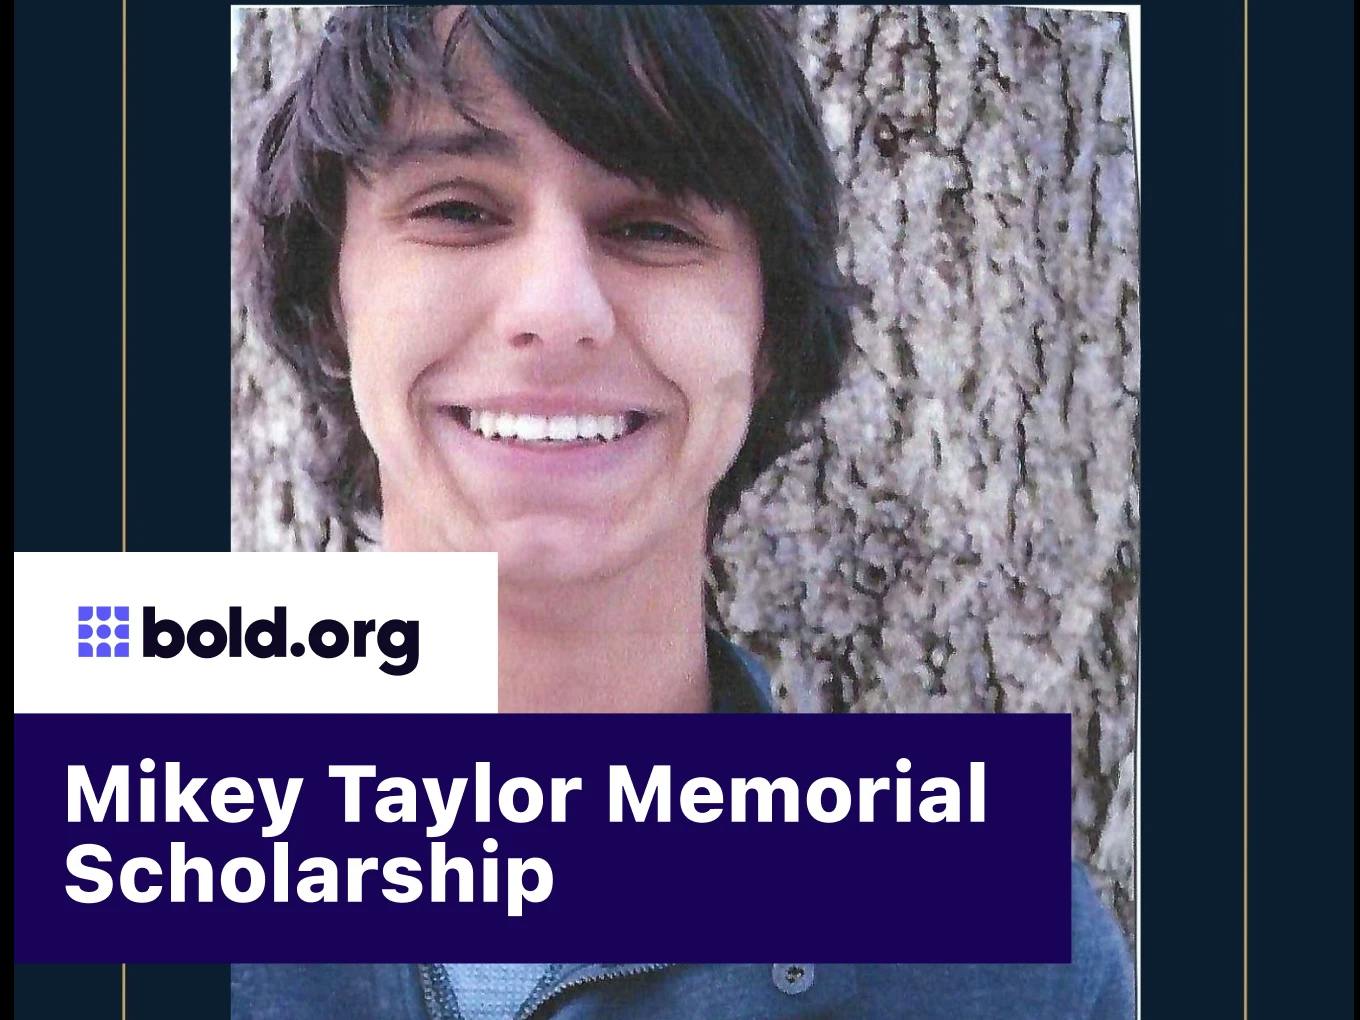 Mikey Taylor Memorial Scholarship